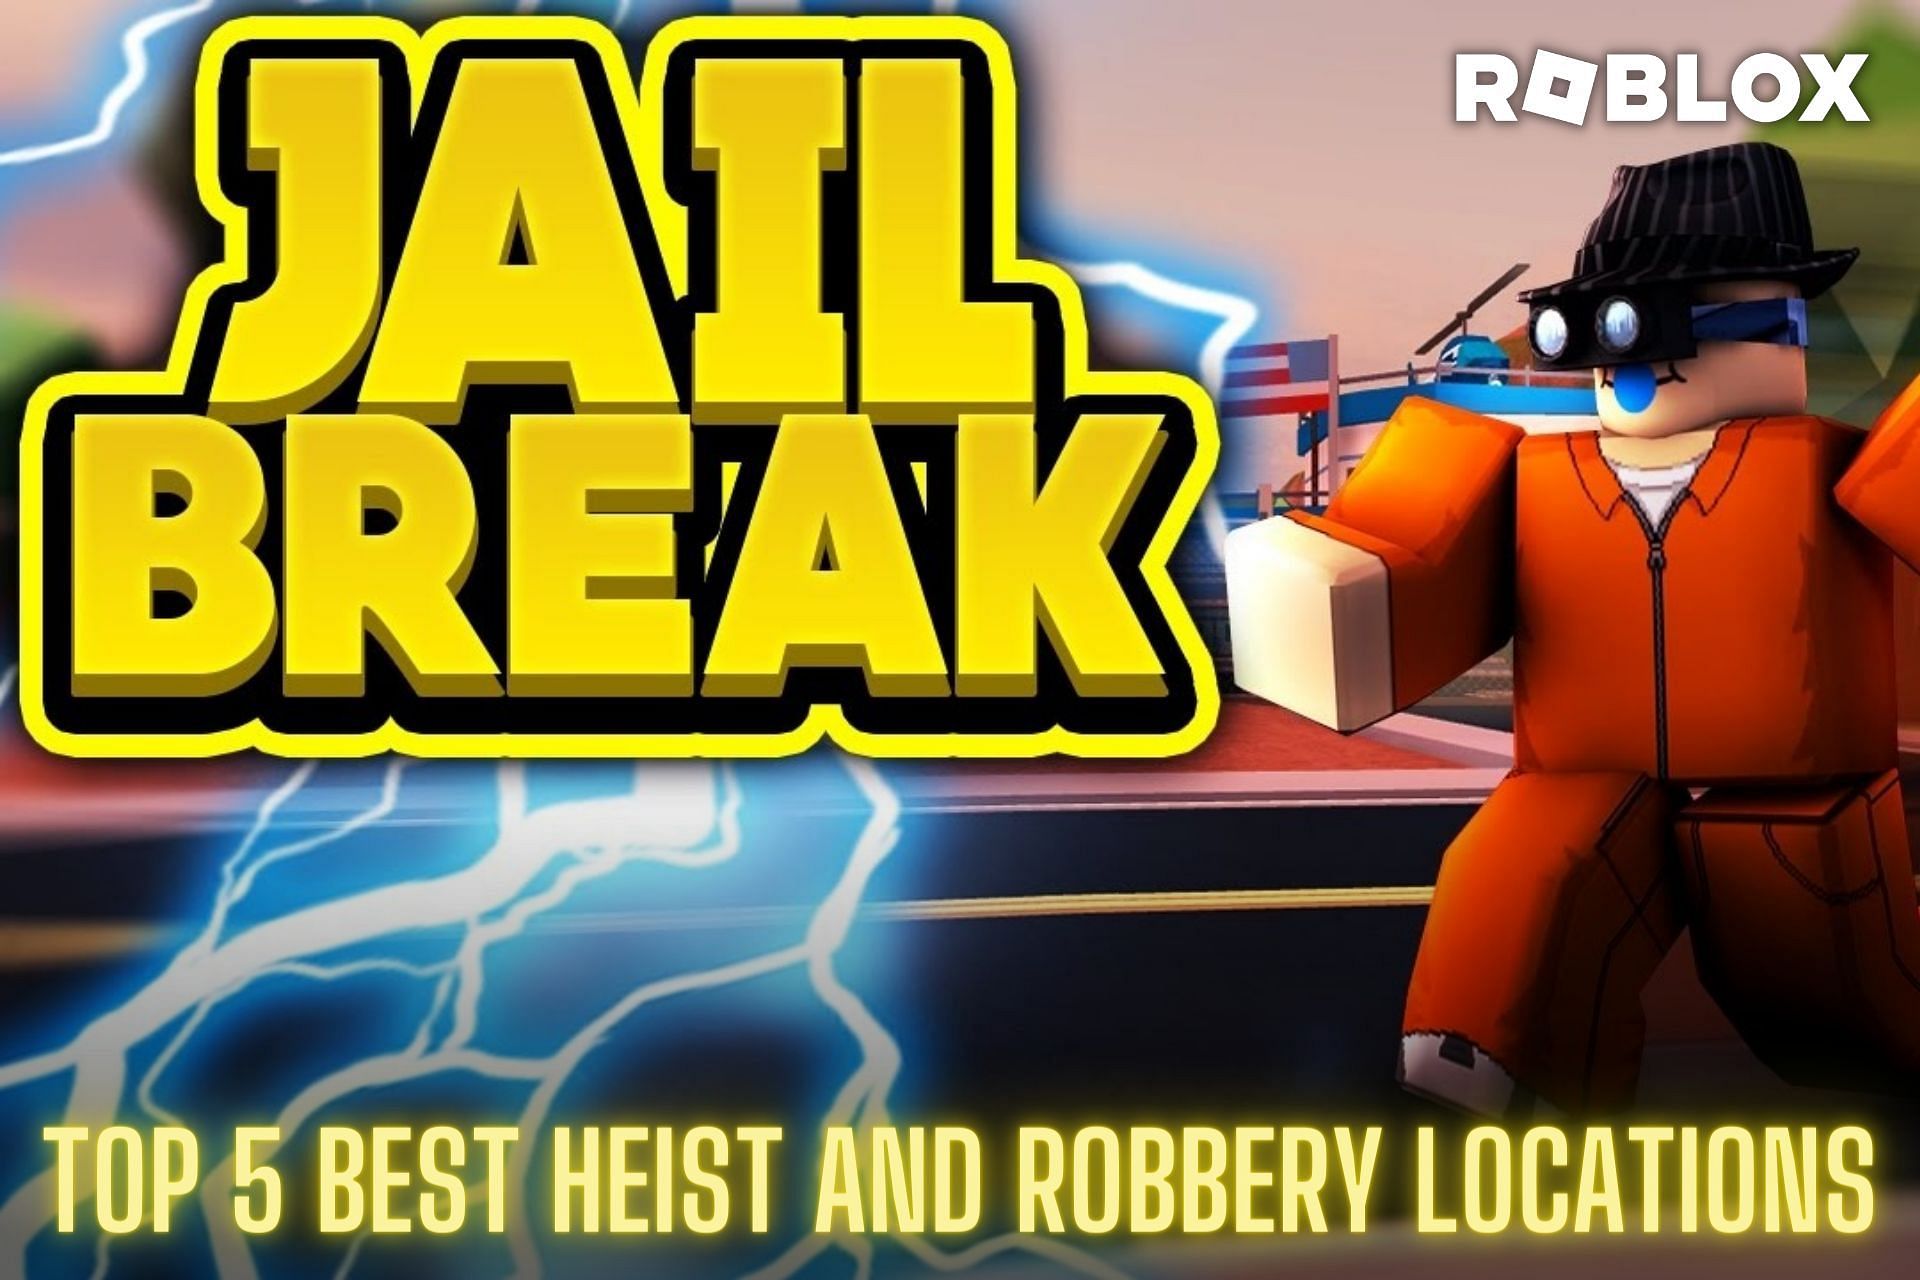 Roblox Jailbreak Gameplay